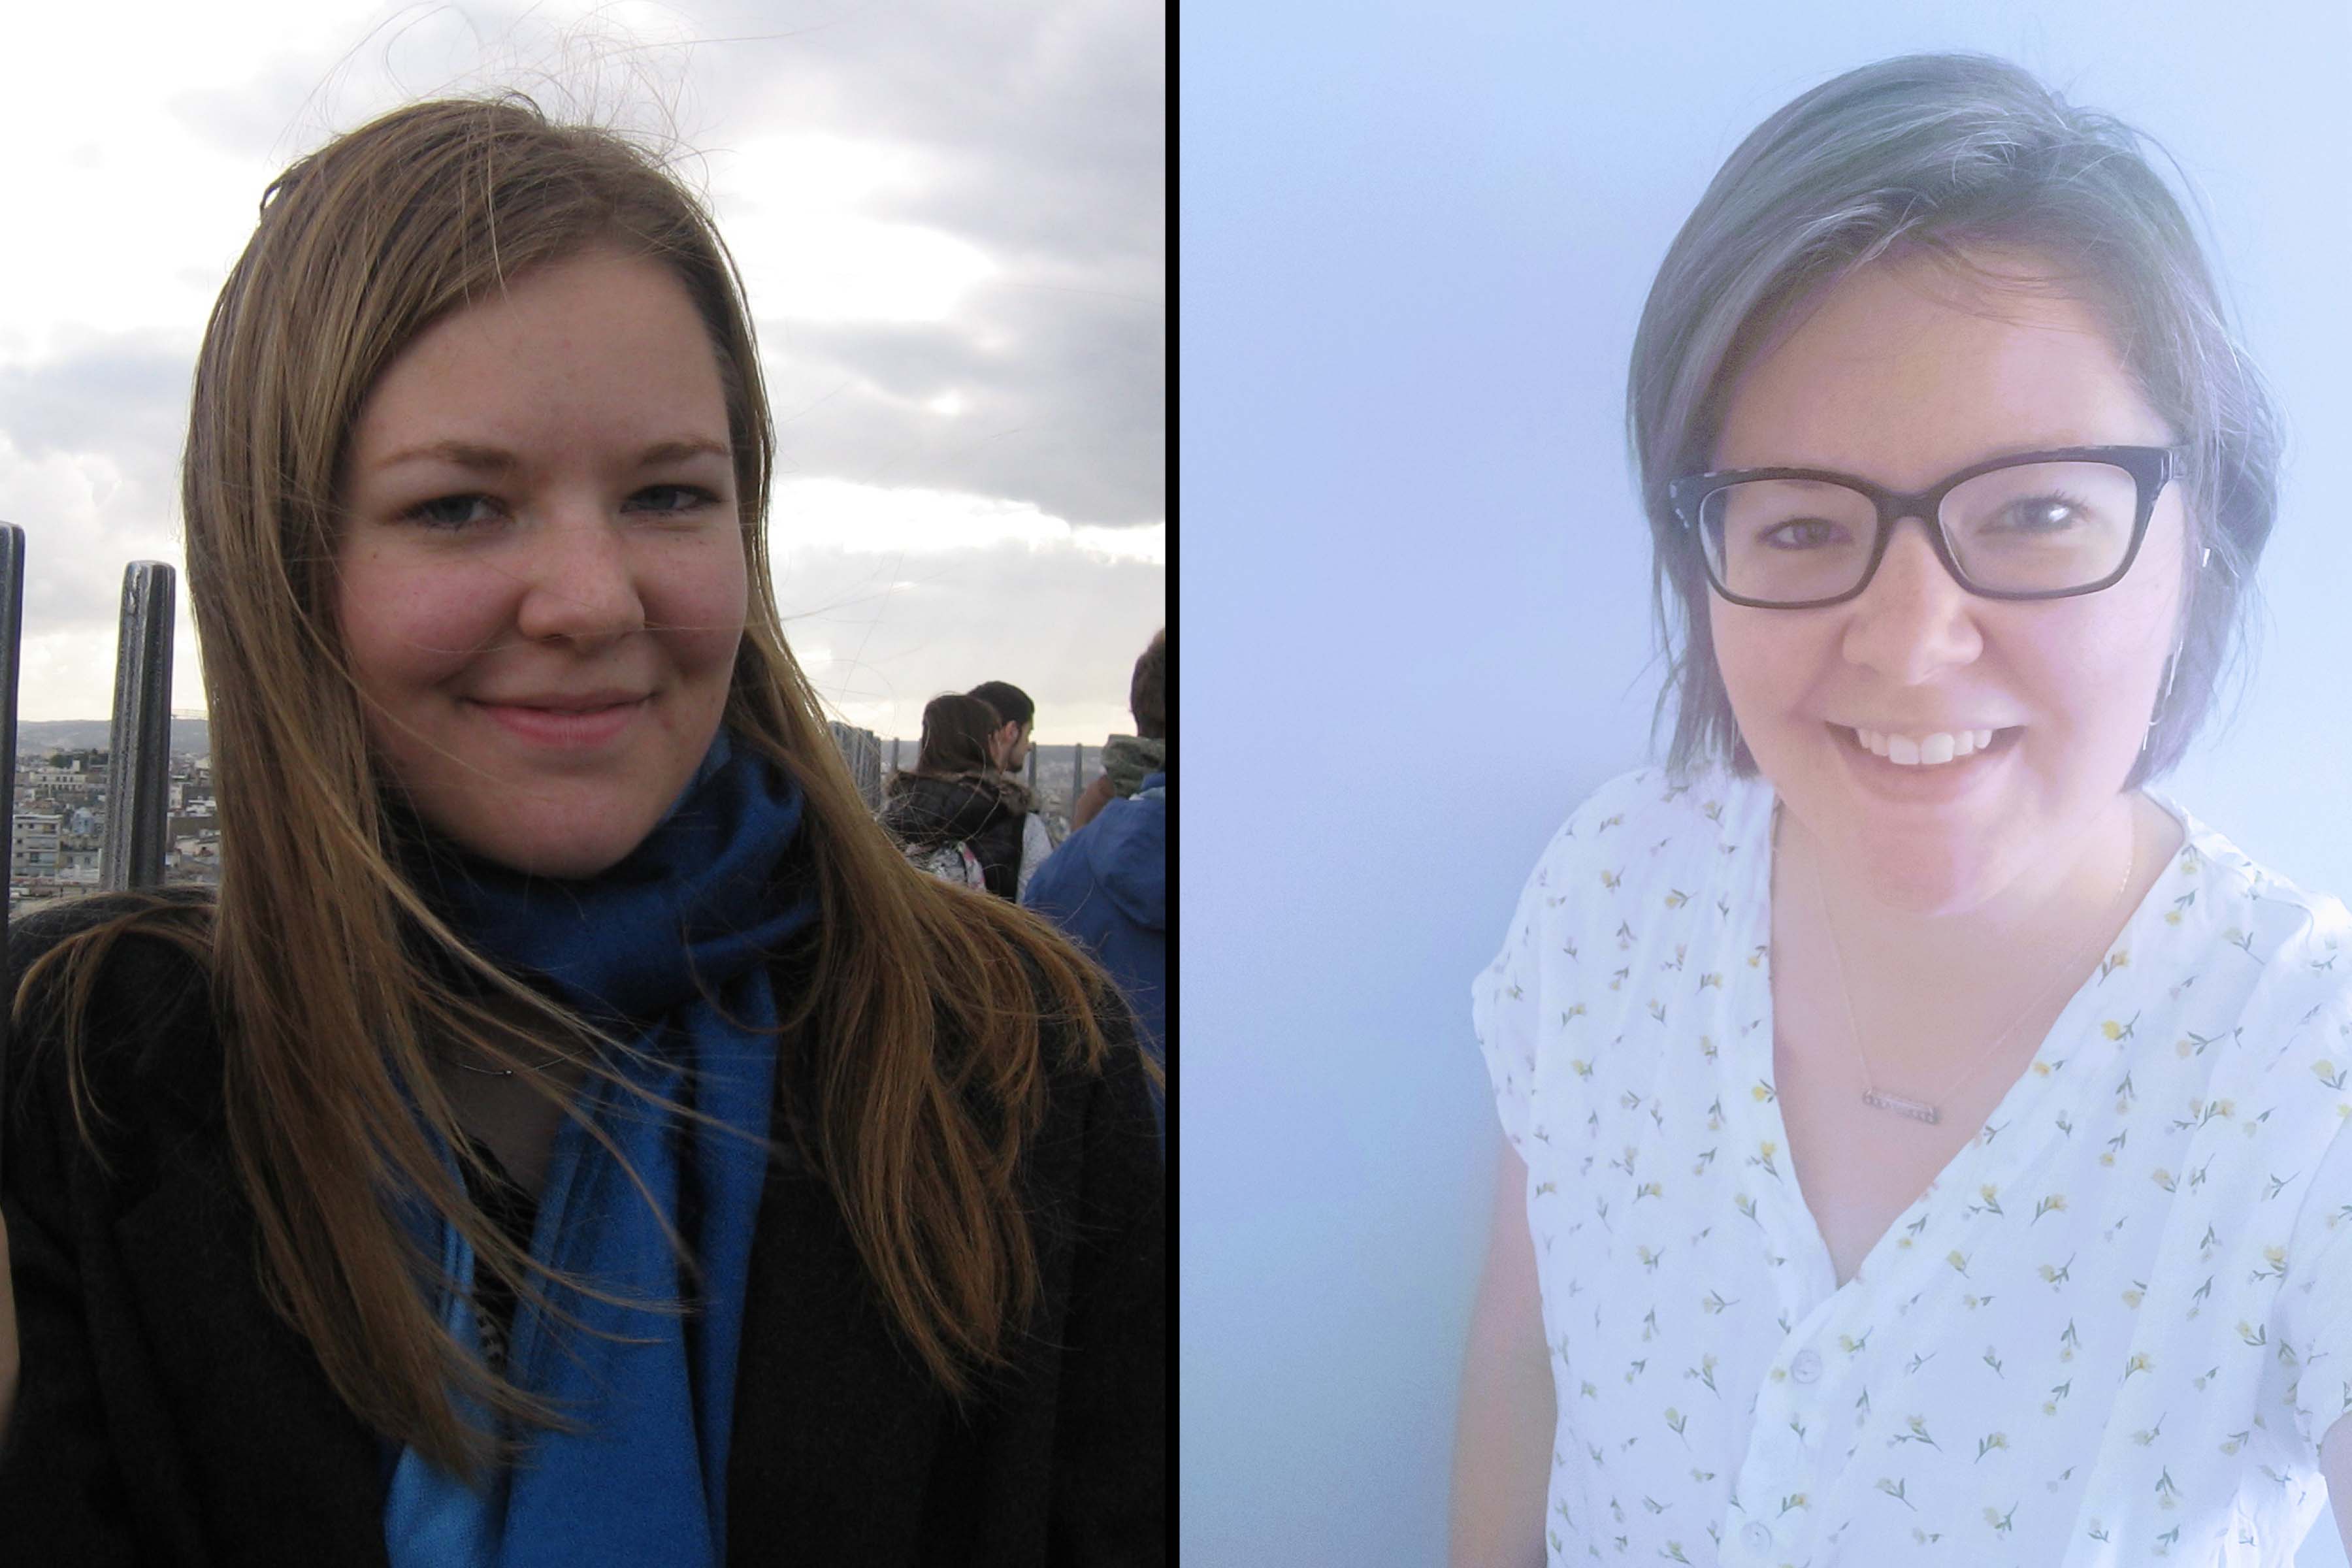 Two headshot photos of the same woman taken 13 years apart.